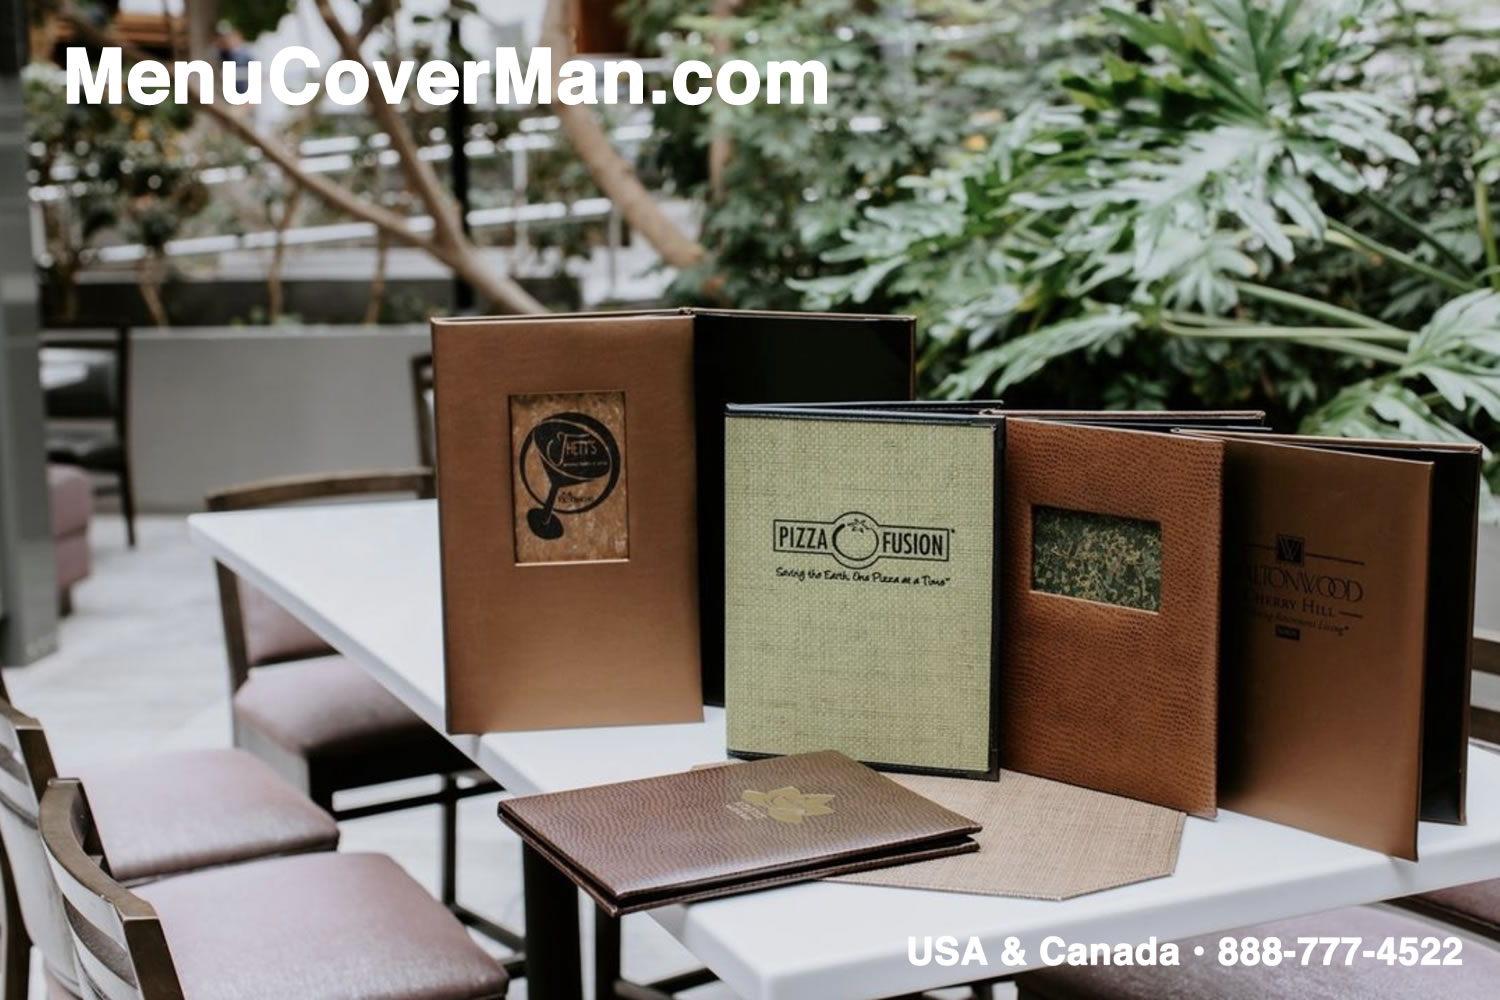 MenuCoverMan.com menu covers present style and classic restaurant beauty.